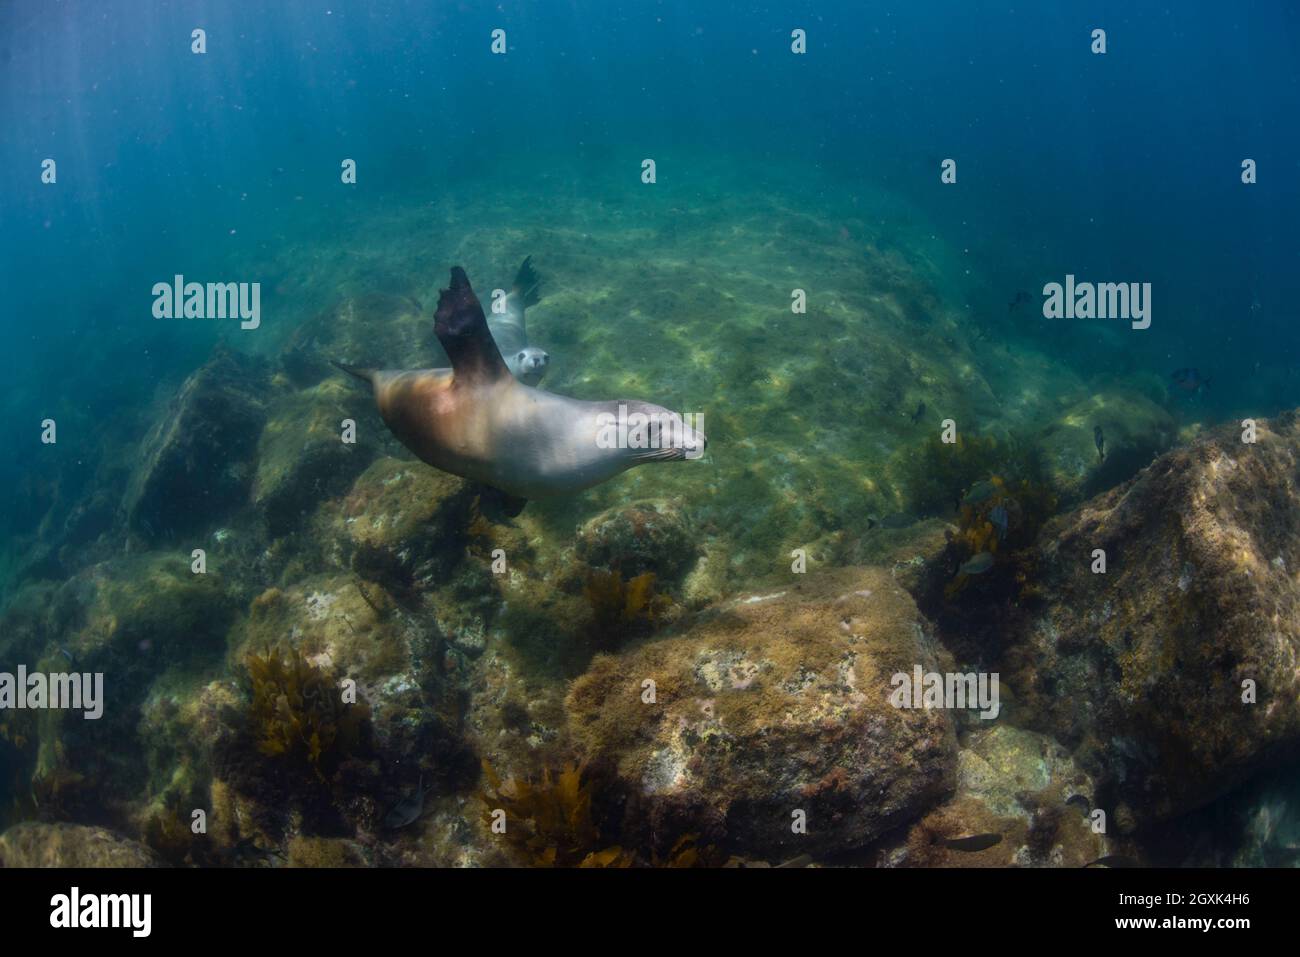 Sea lion swimming underwater in ocean, Baird Bay, Eyre Peninsula, South Australia, Australia Stock Photo